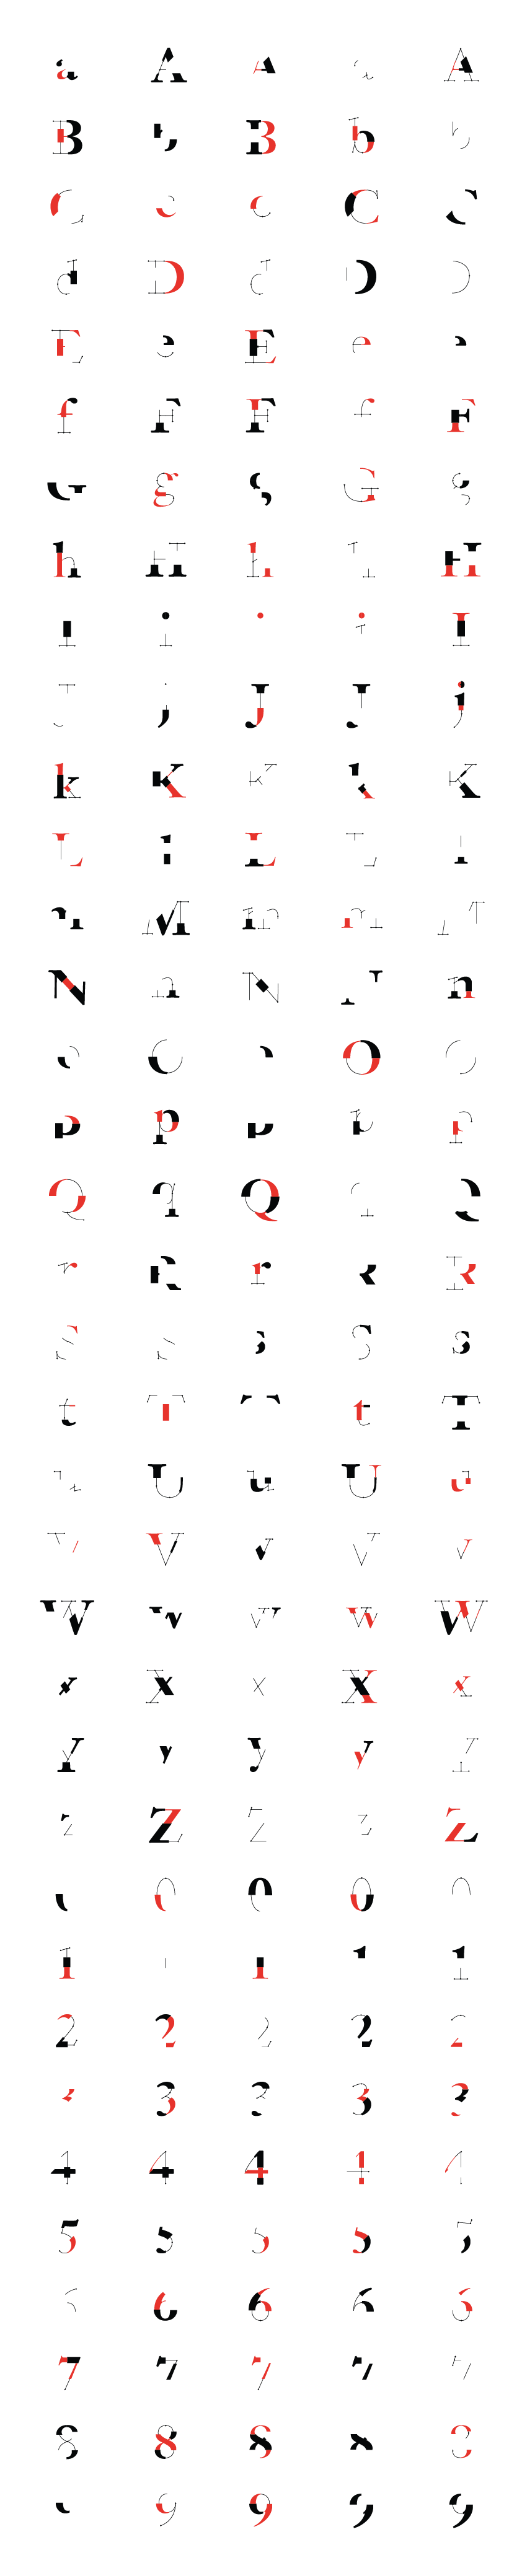 Adobe Portfolio type letter alphabet word Typeface font anatomy black red line uppercase lowercase number